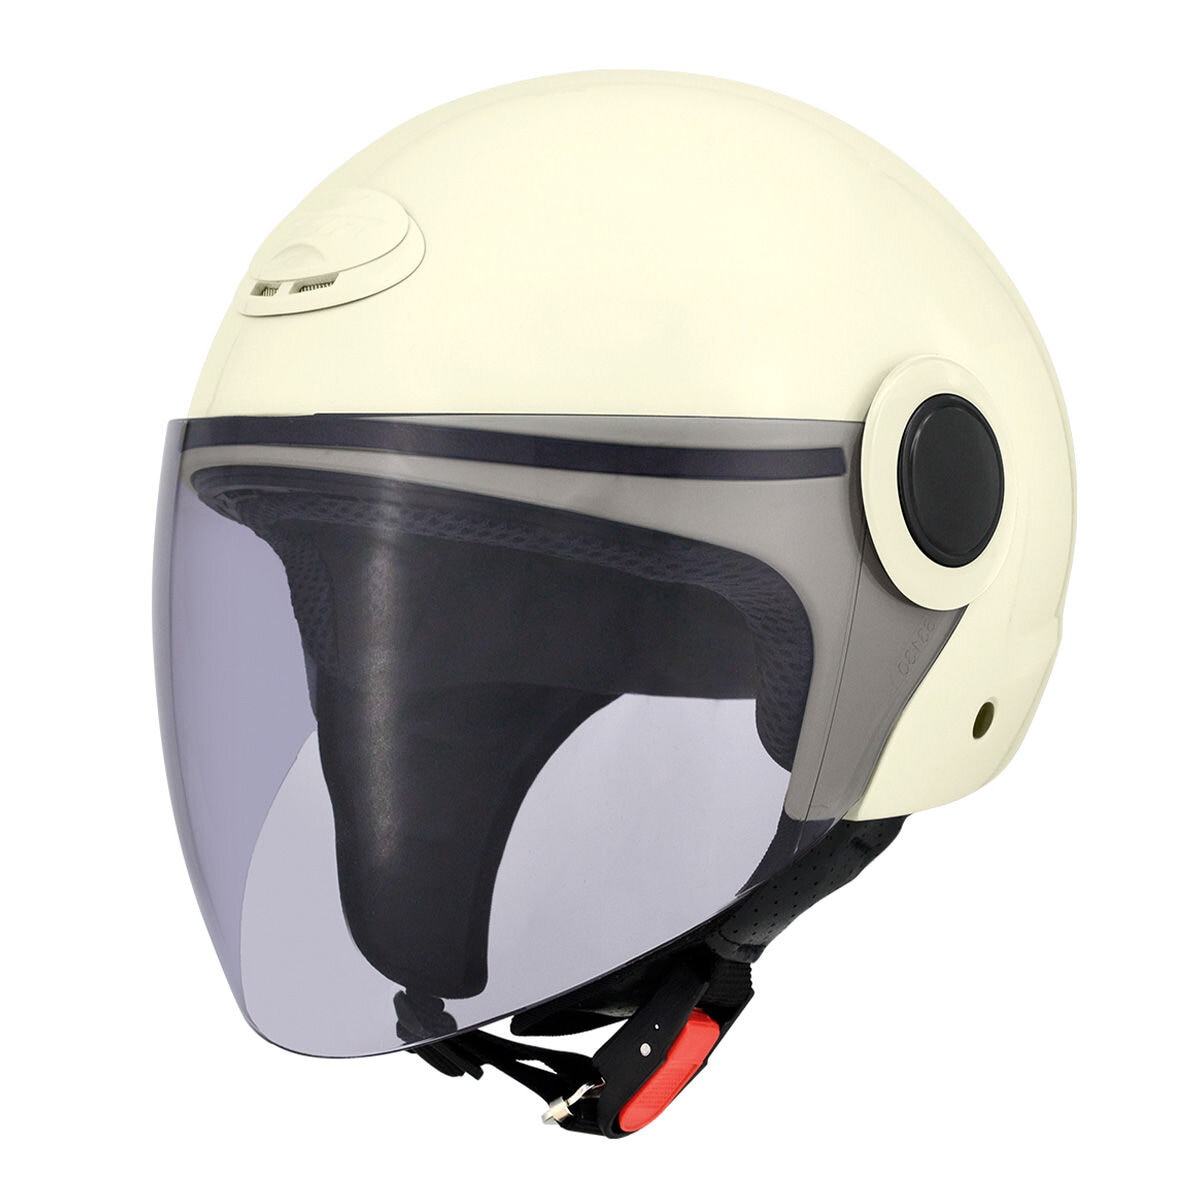 M2R 1/2罩安全帽 騎乘機車用防護頭盔 M-506 亮米 XXL